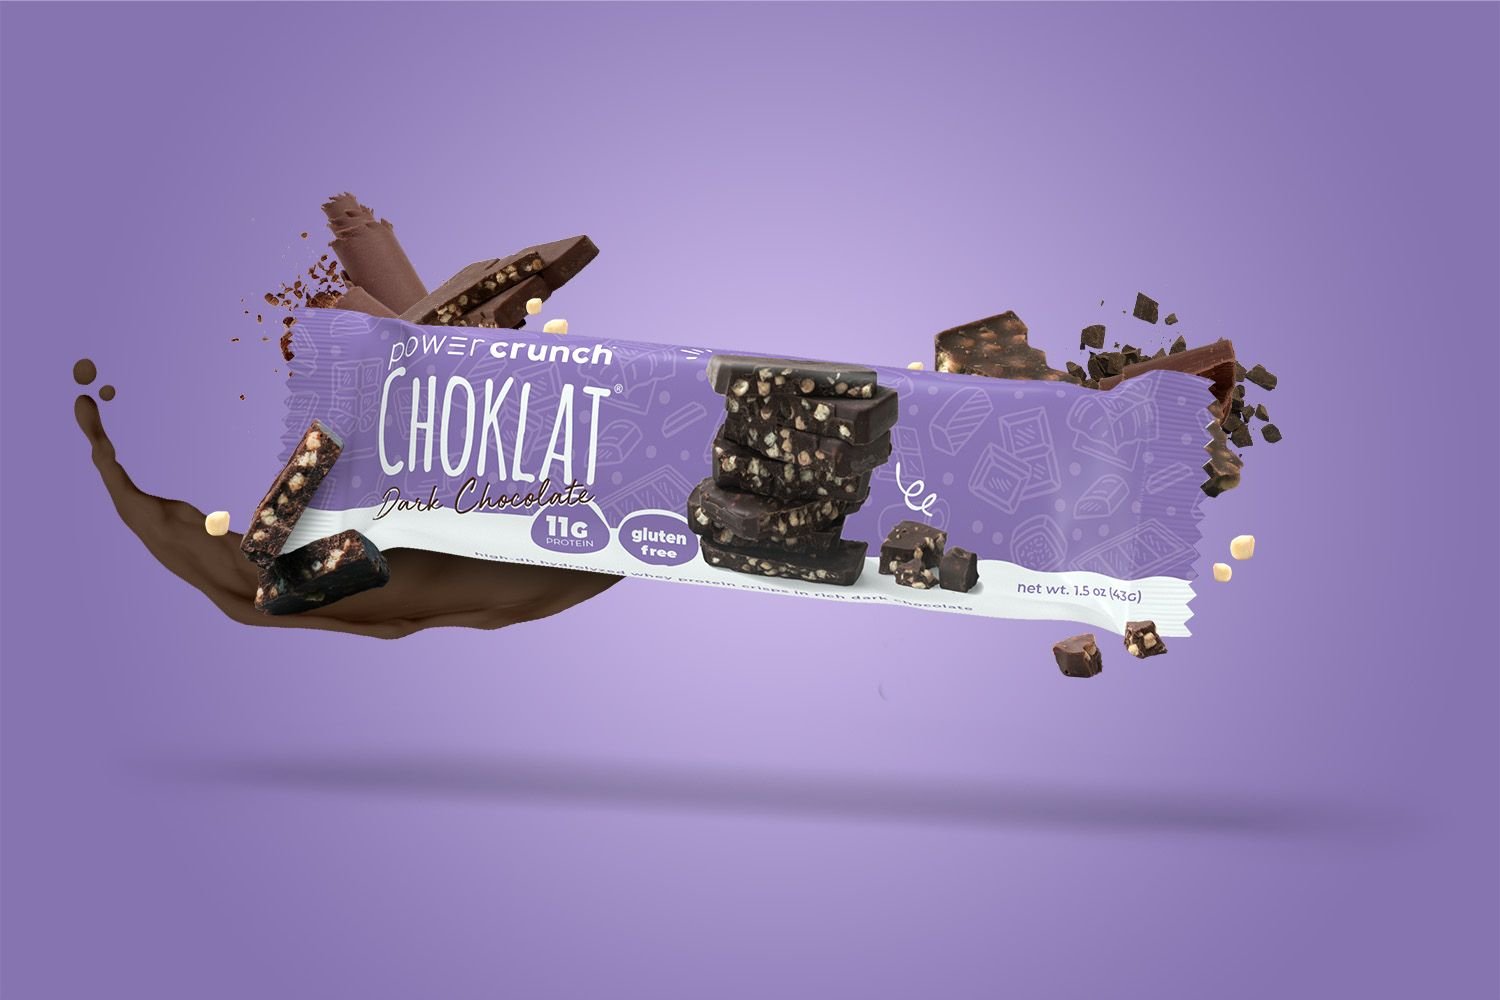 Gluten Free Choklat Dark Chocolate bars pictured with chocolate flavor explosion